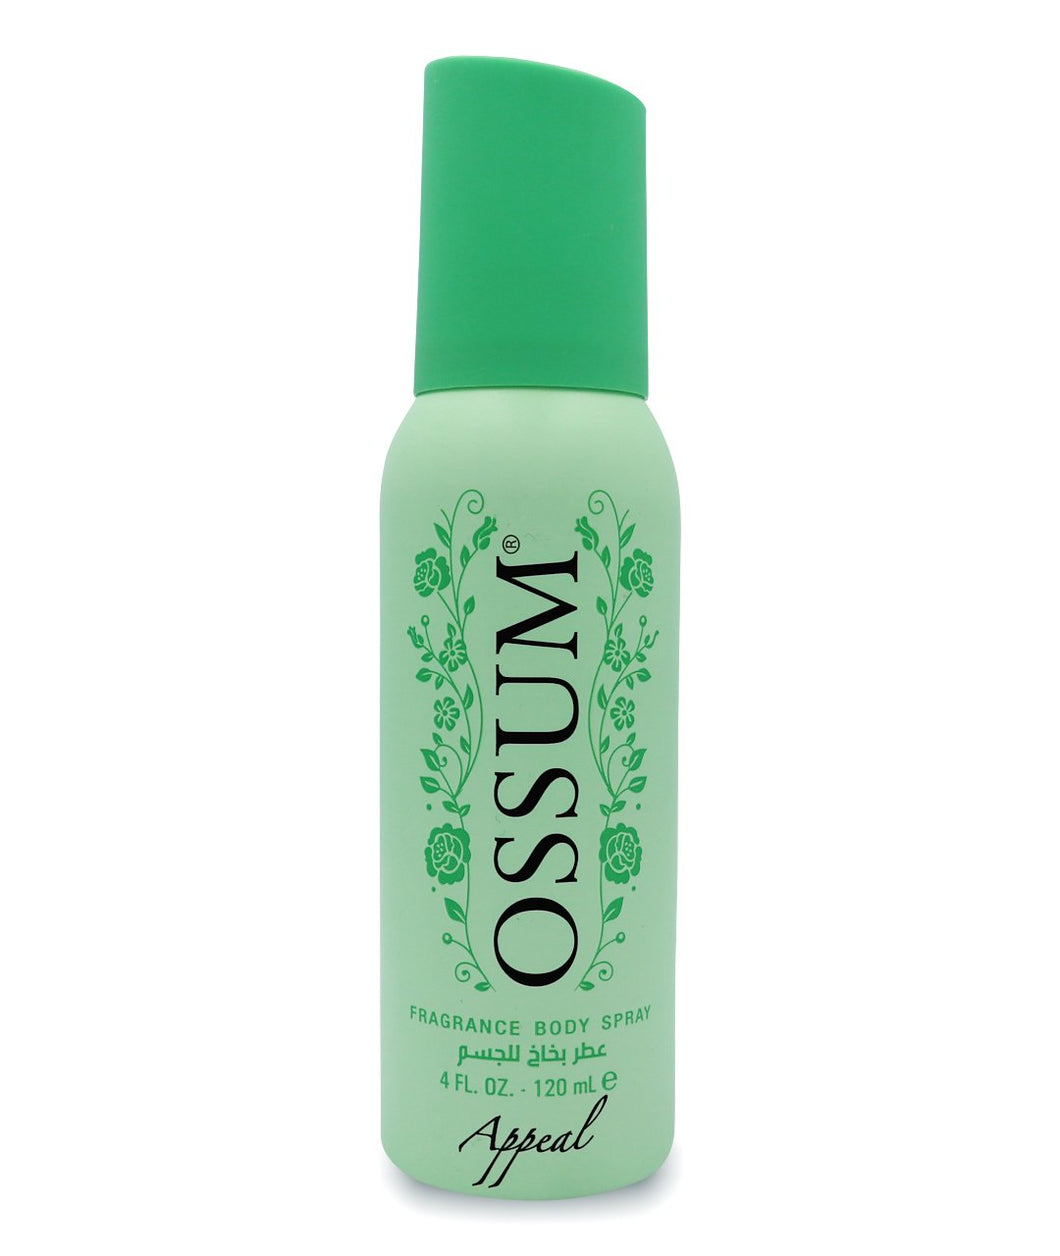 OSSUM Fragrance Body Spray 120 ml - Appeal